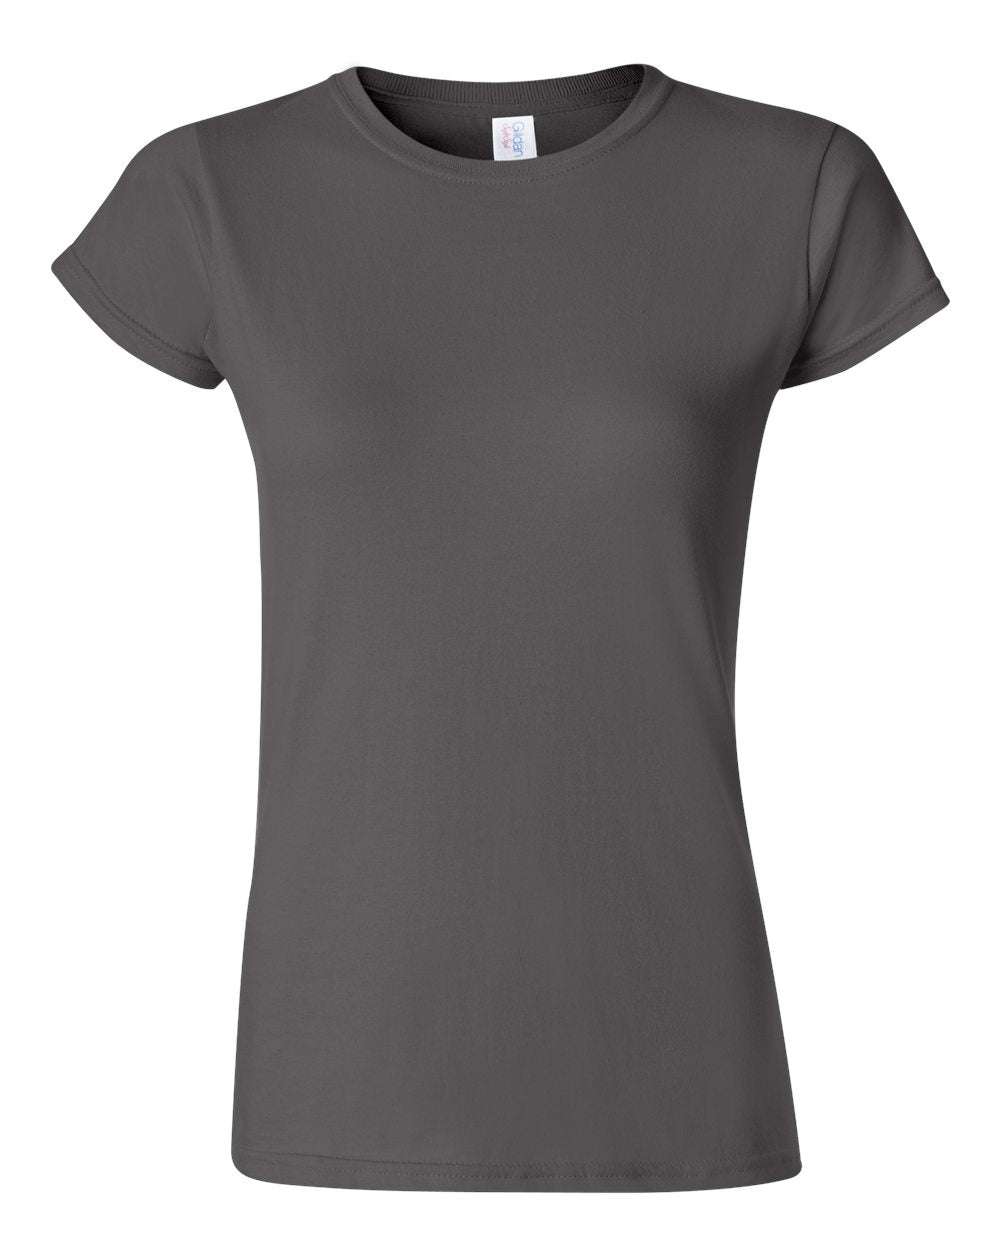 Buy Women's/Ladies/Girls Long T-Shirt - Soft and Comfortable Tee